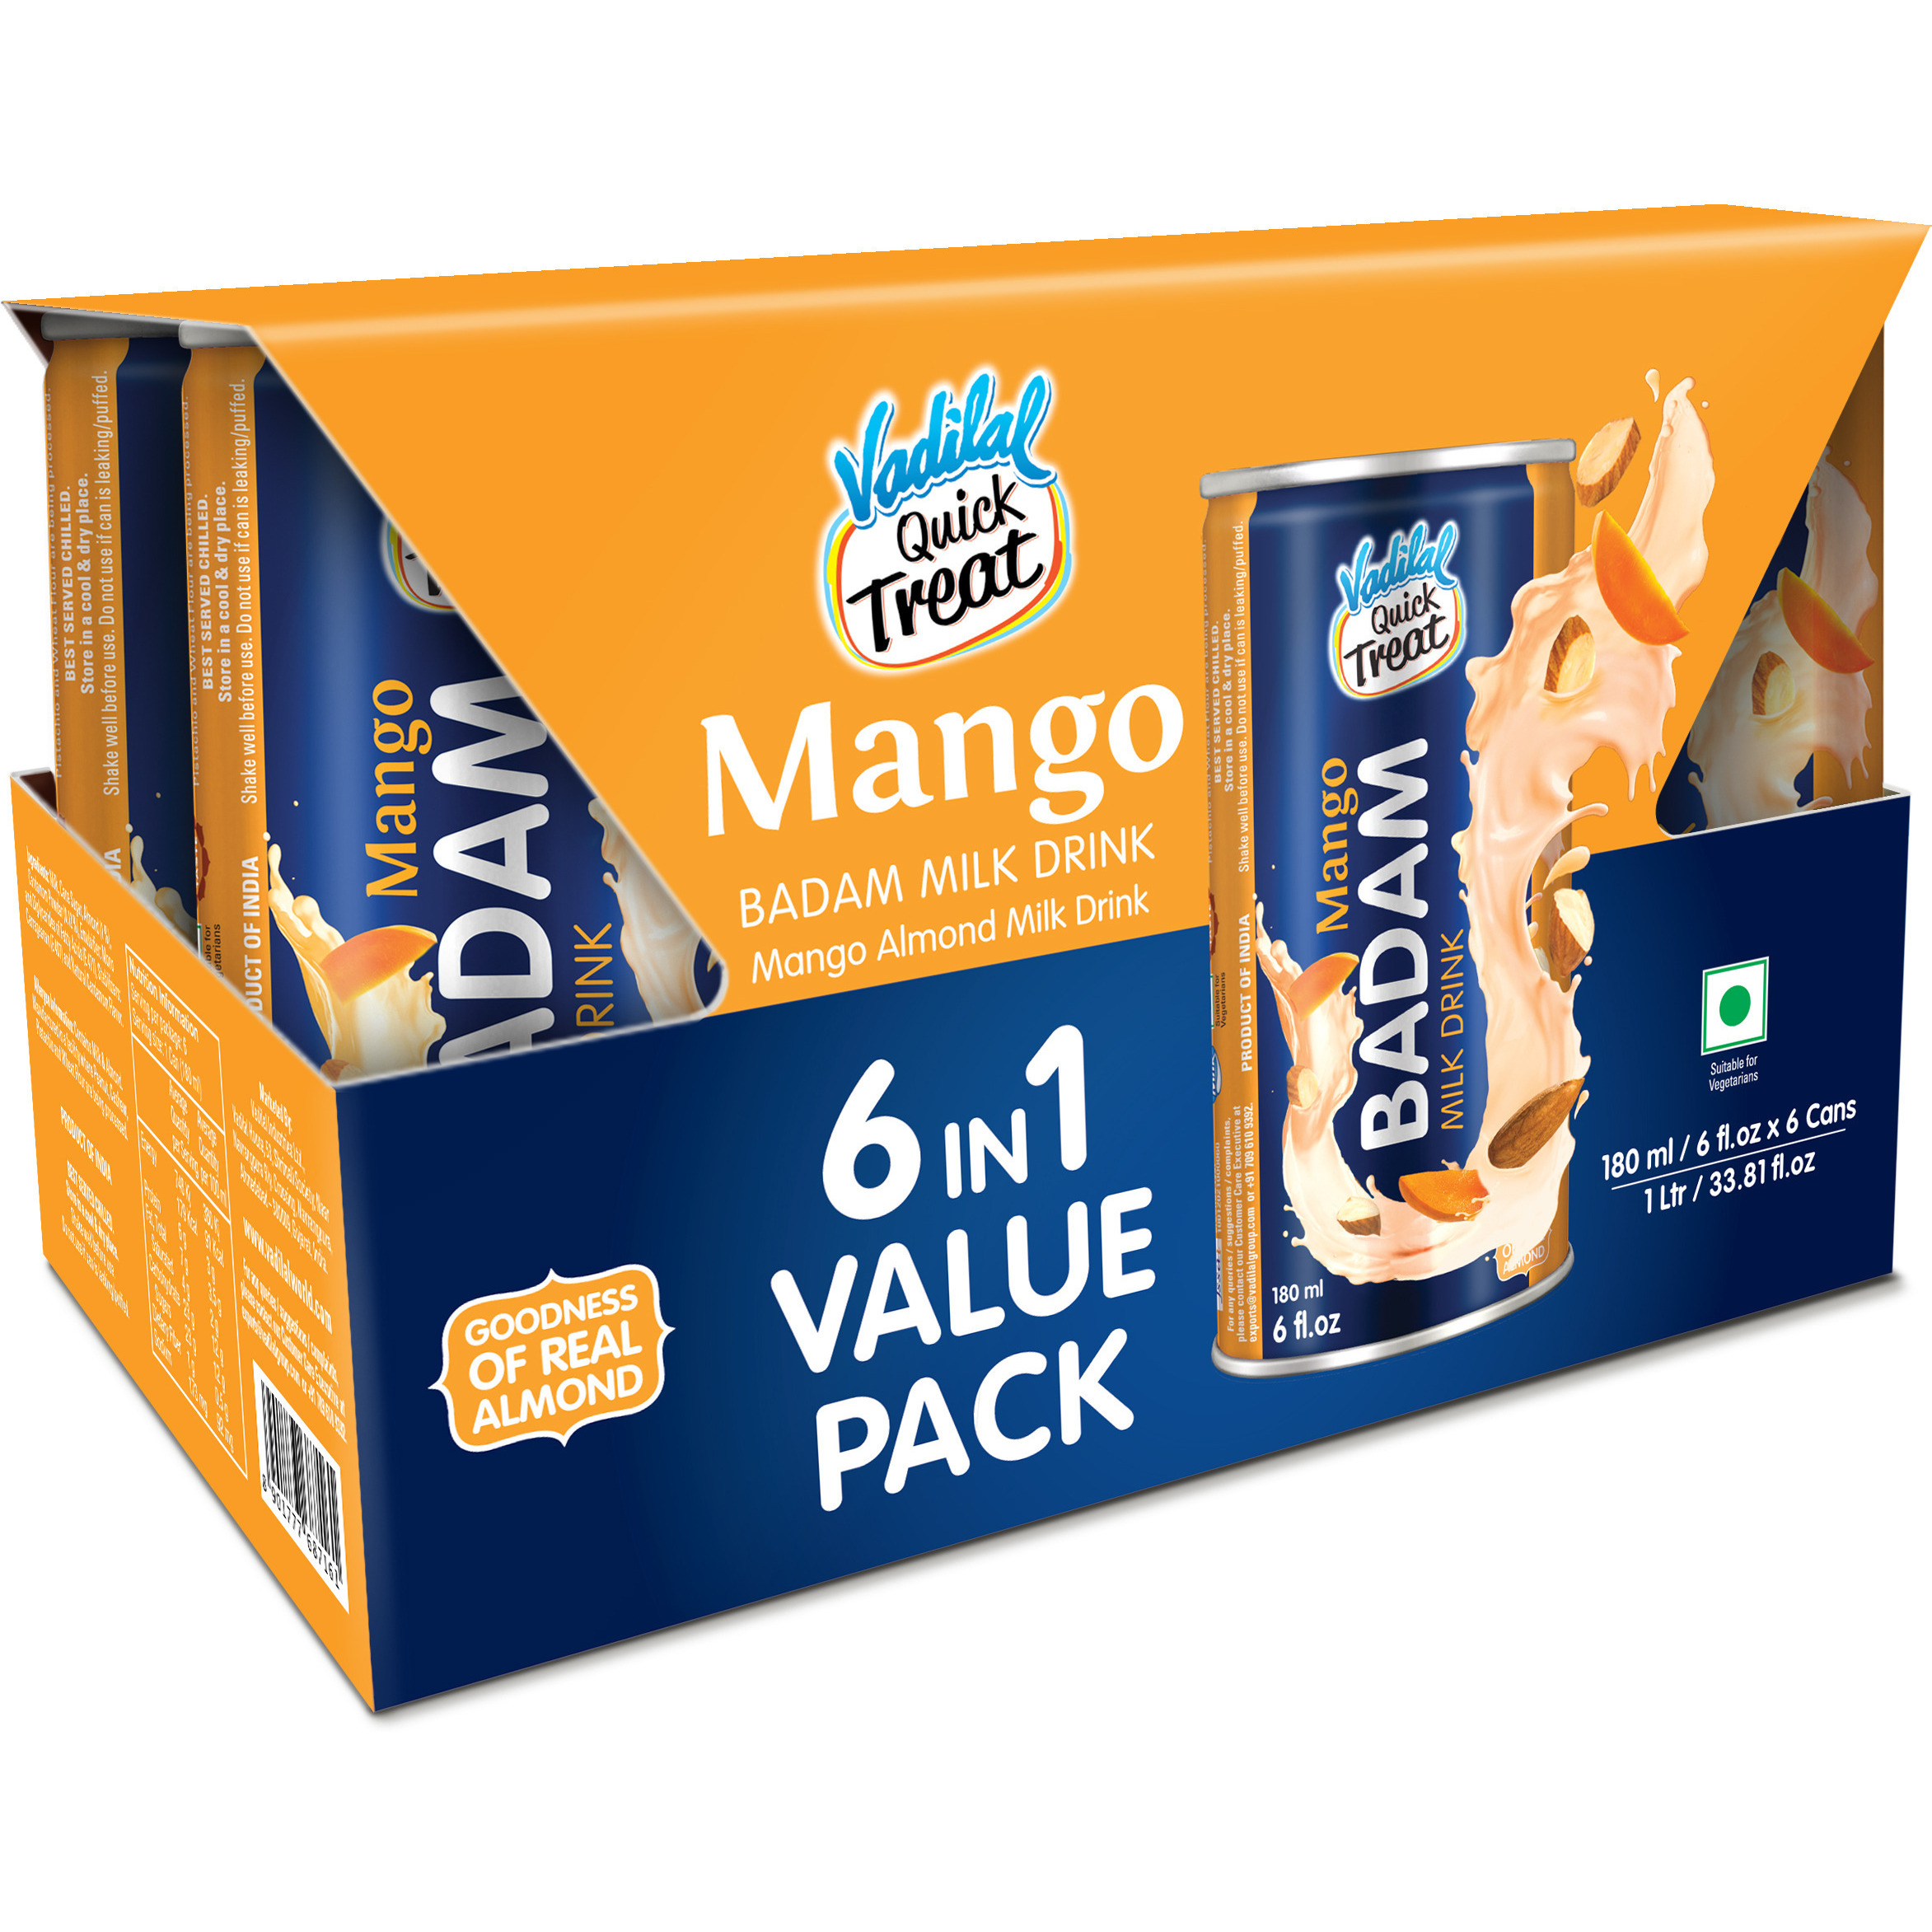 Pack of 2 - Vadilal Mango Badam Milk - 6 In 1 Value Pack - 180 Ml (6 Fl Oz)